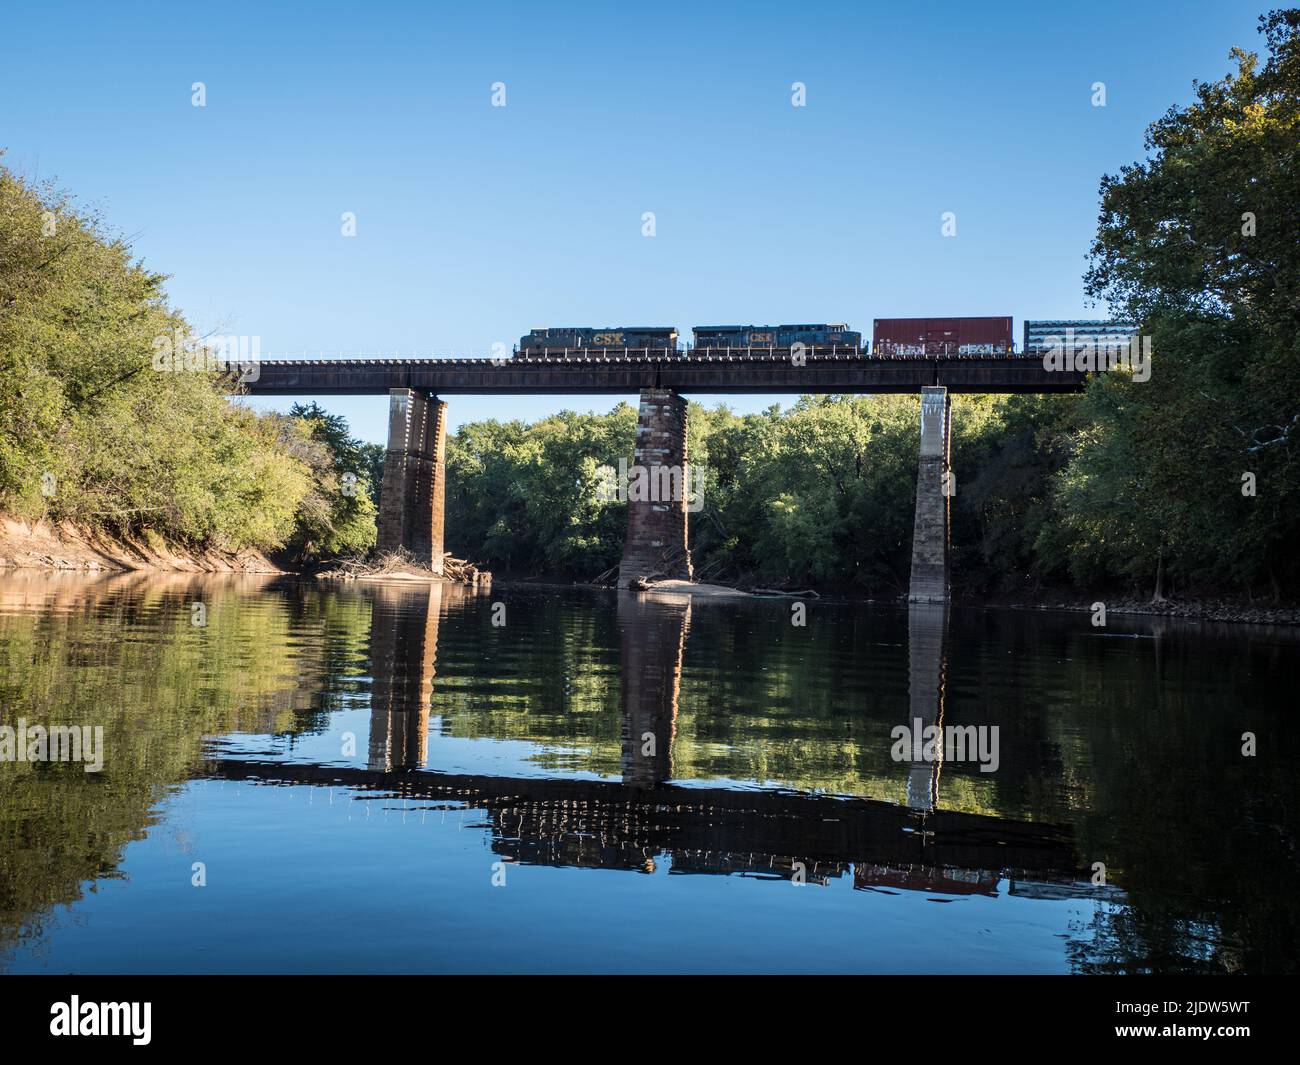 El tren CSX cruza el puente del ferrocarril del río Monocacy Foto de stock